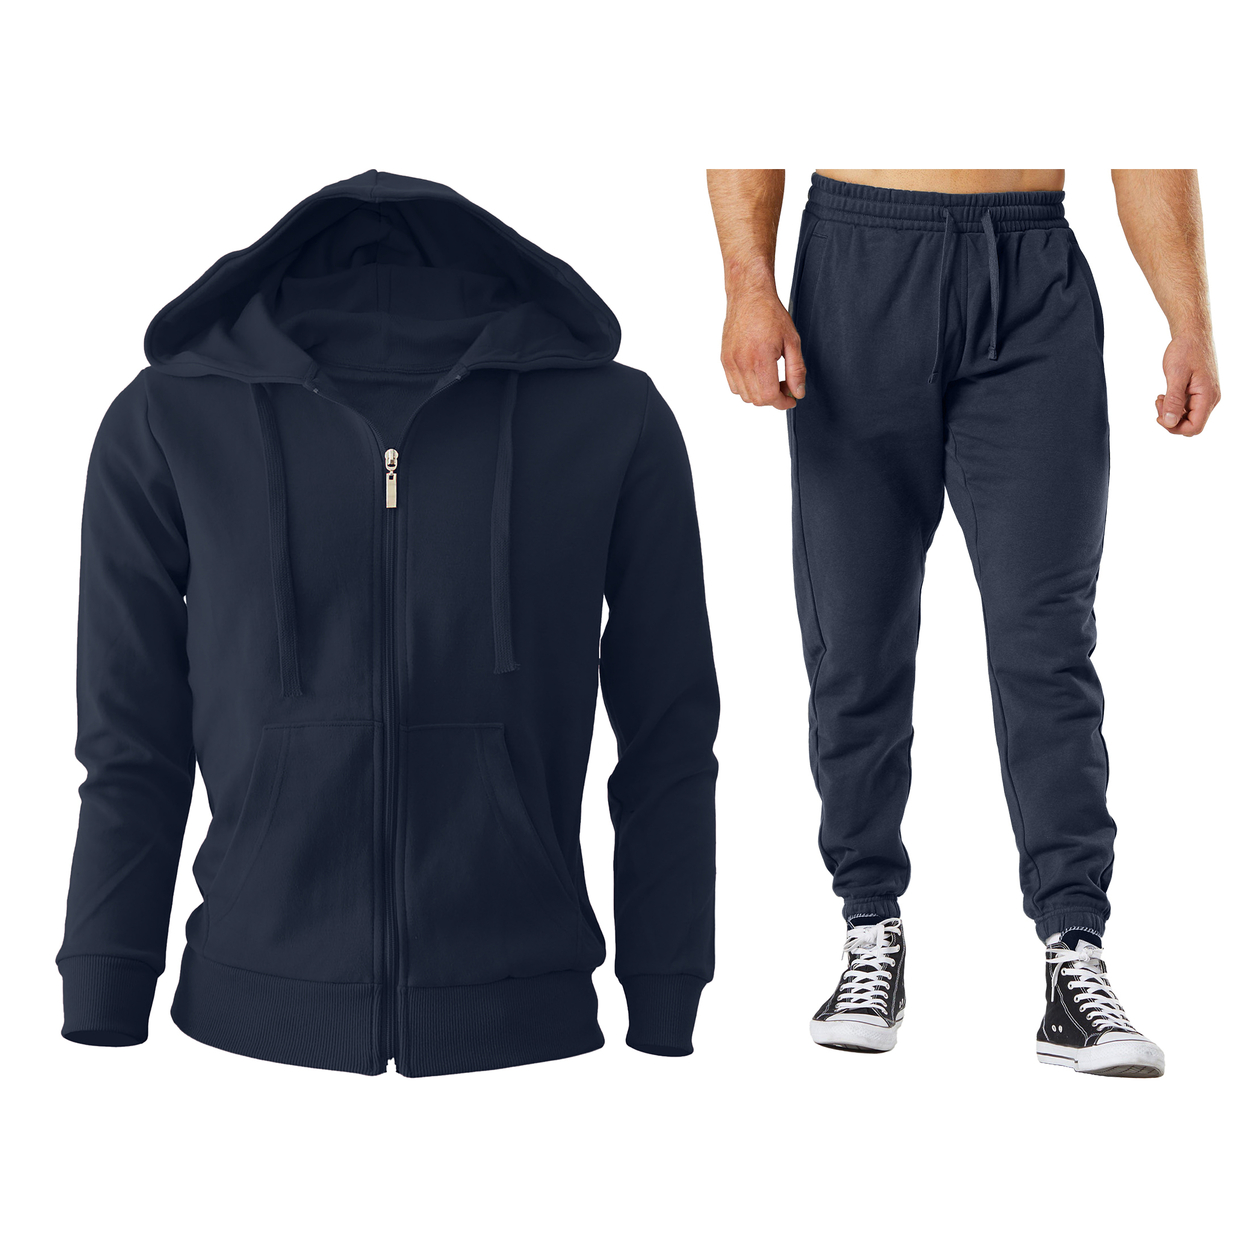 2/4-Piece: Men's Winter Warm Cozy Athletic Multi-Pockets BIG & TALL Sweatsuit Set - Black, 1, Xx-large